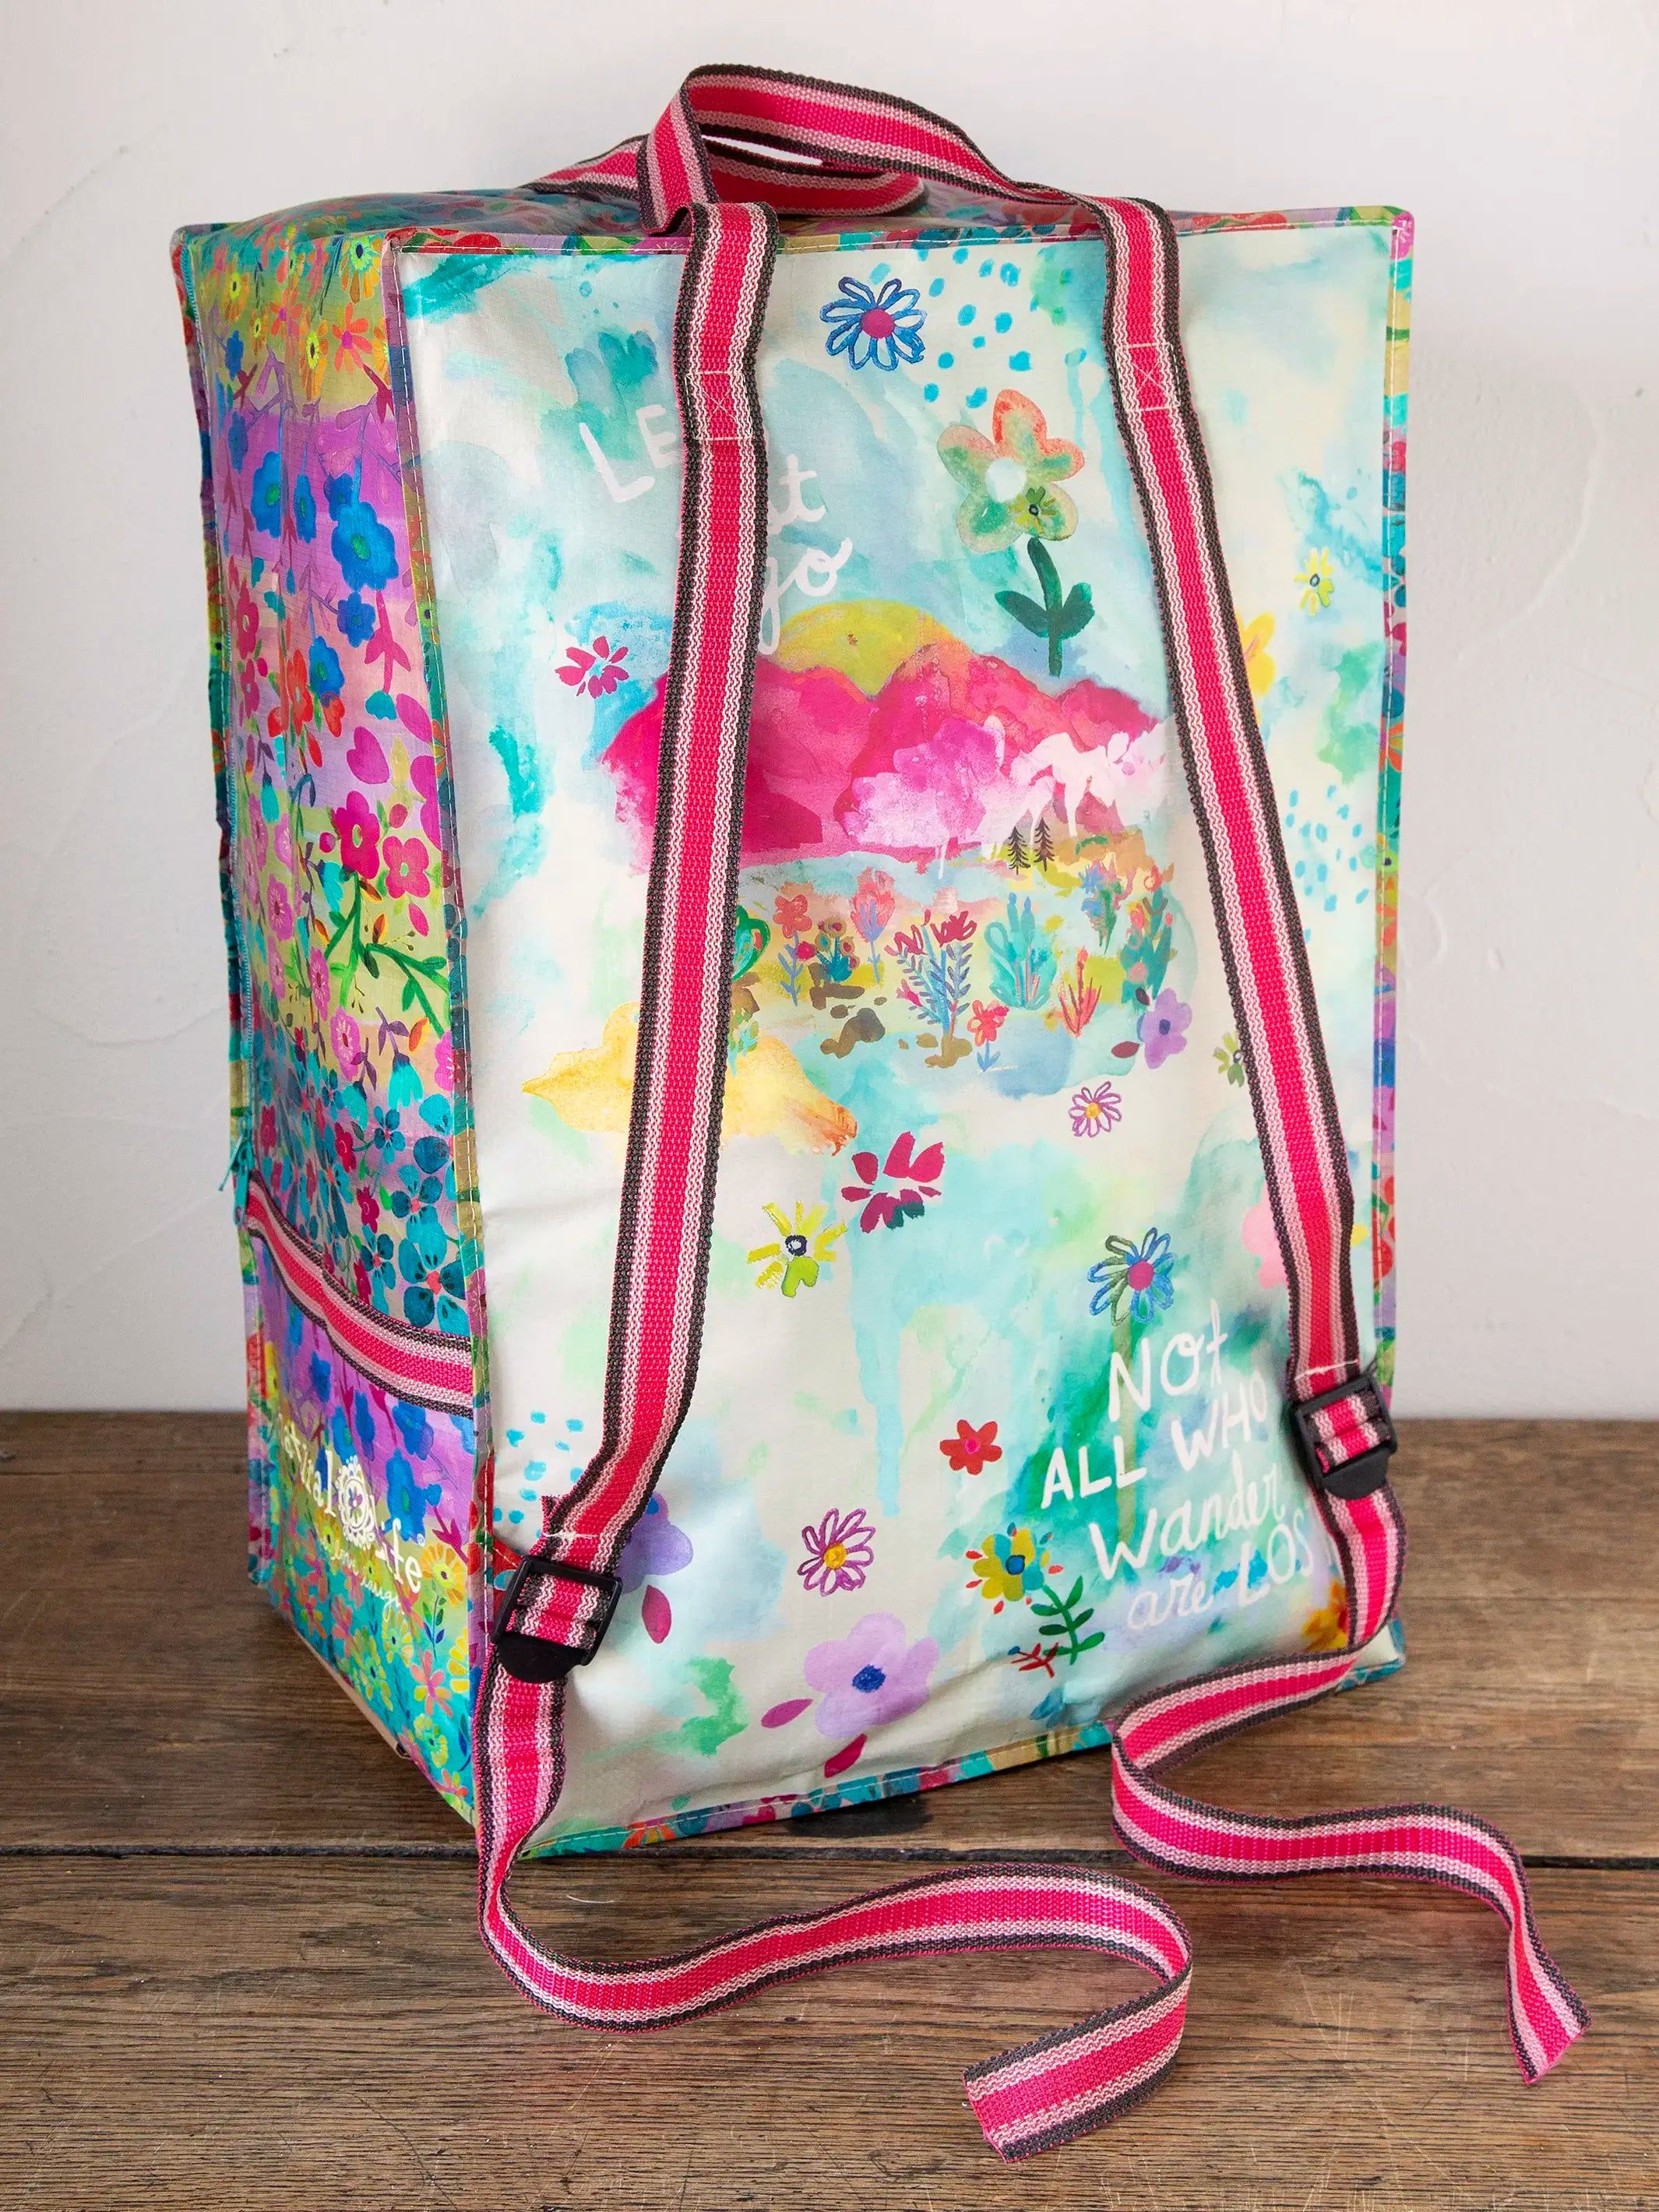 XL Backpack Tote Bag - Let's Just Go | Natural Life